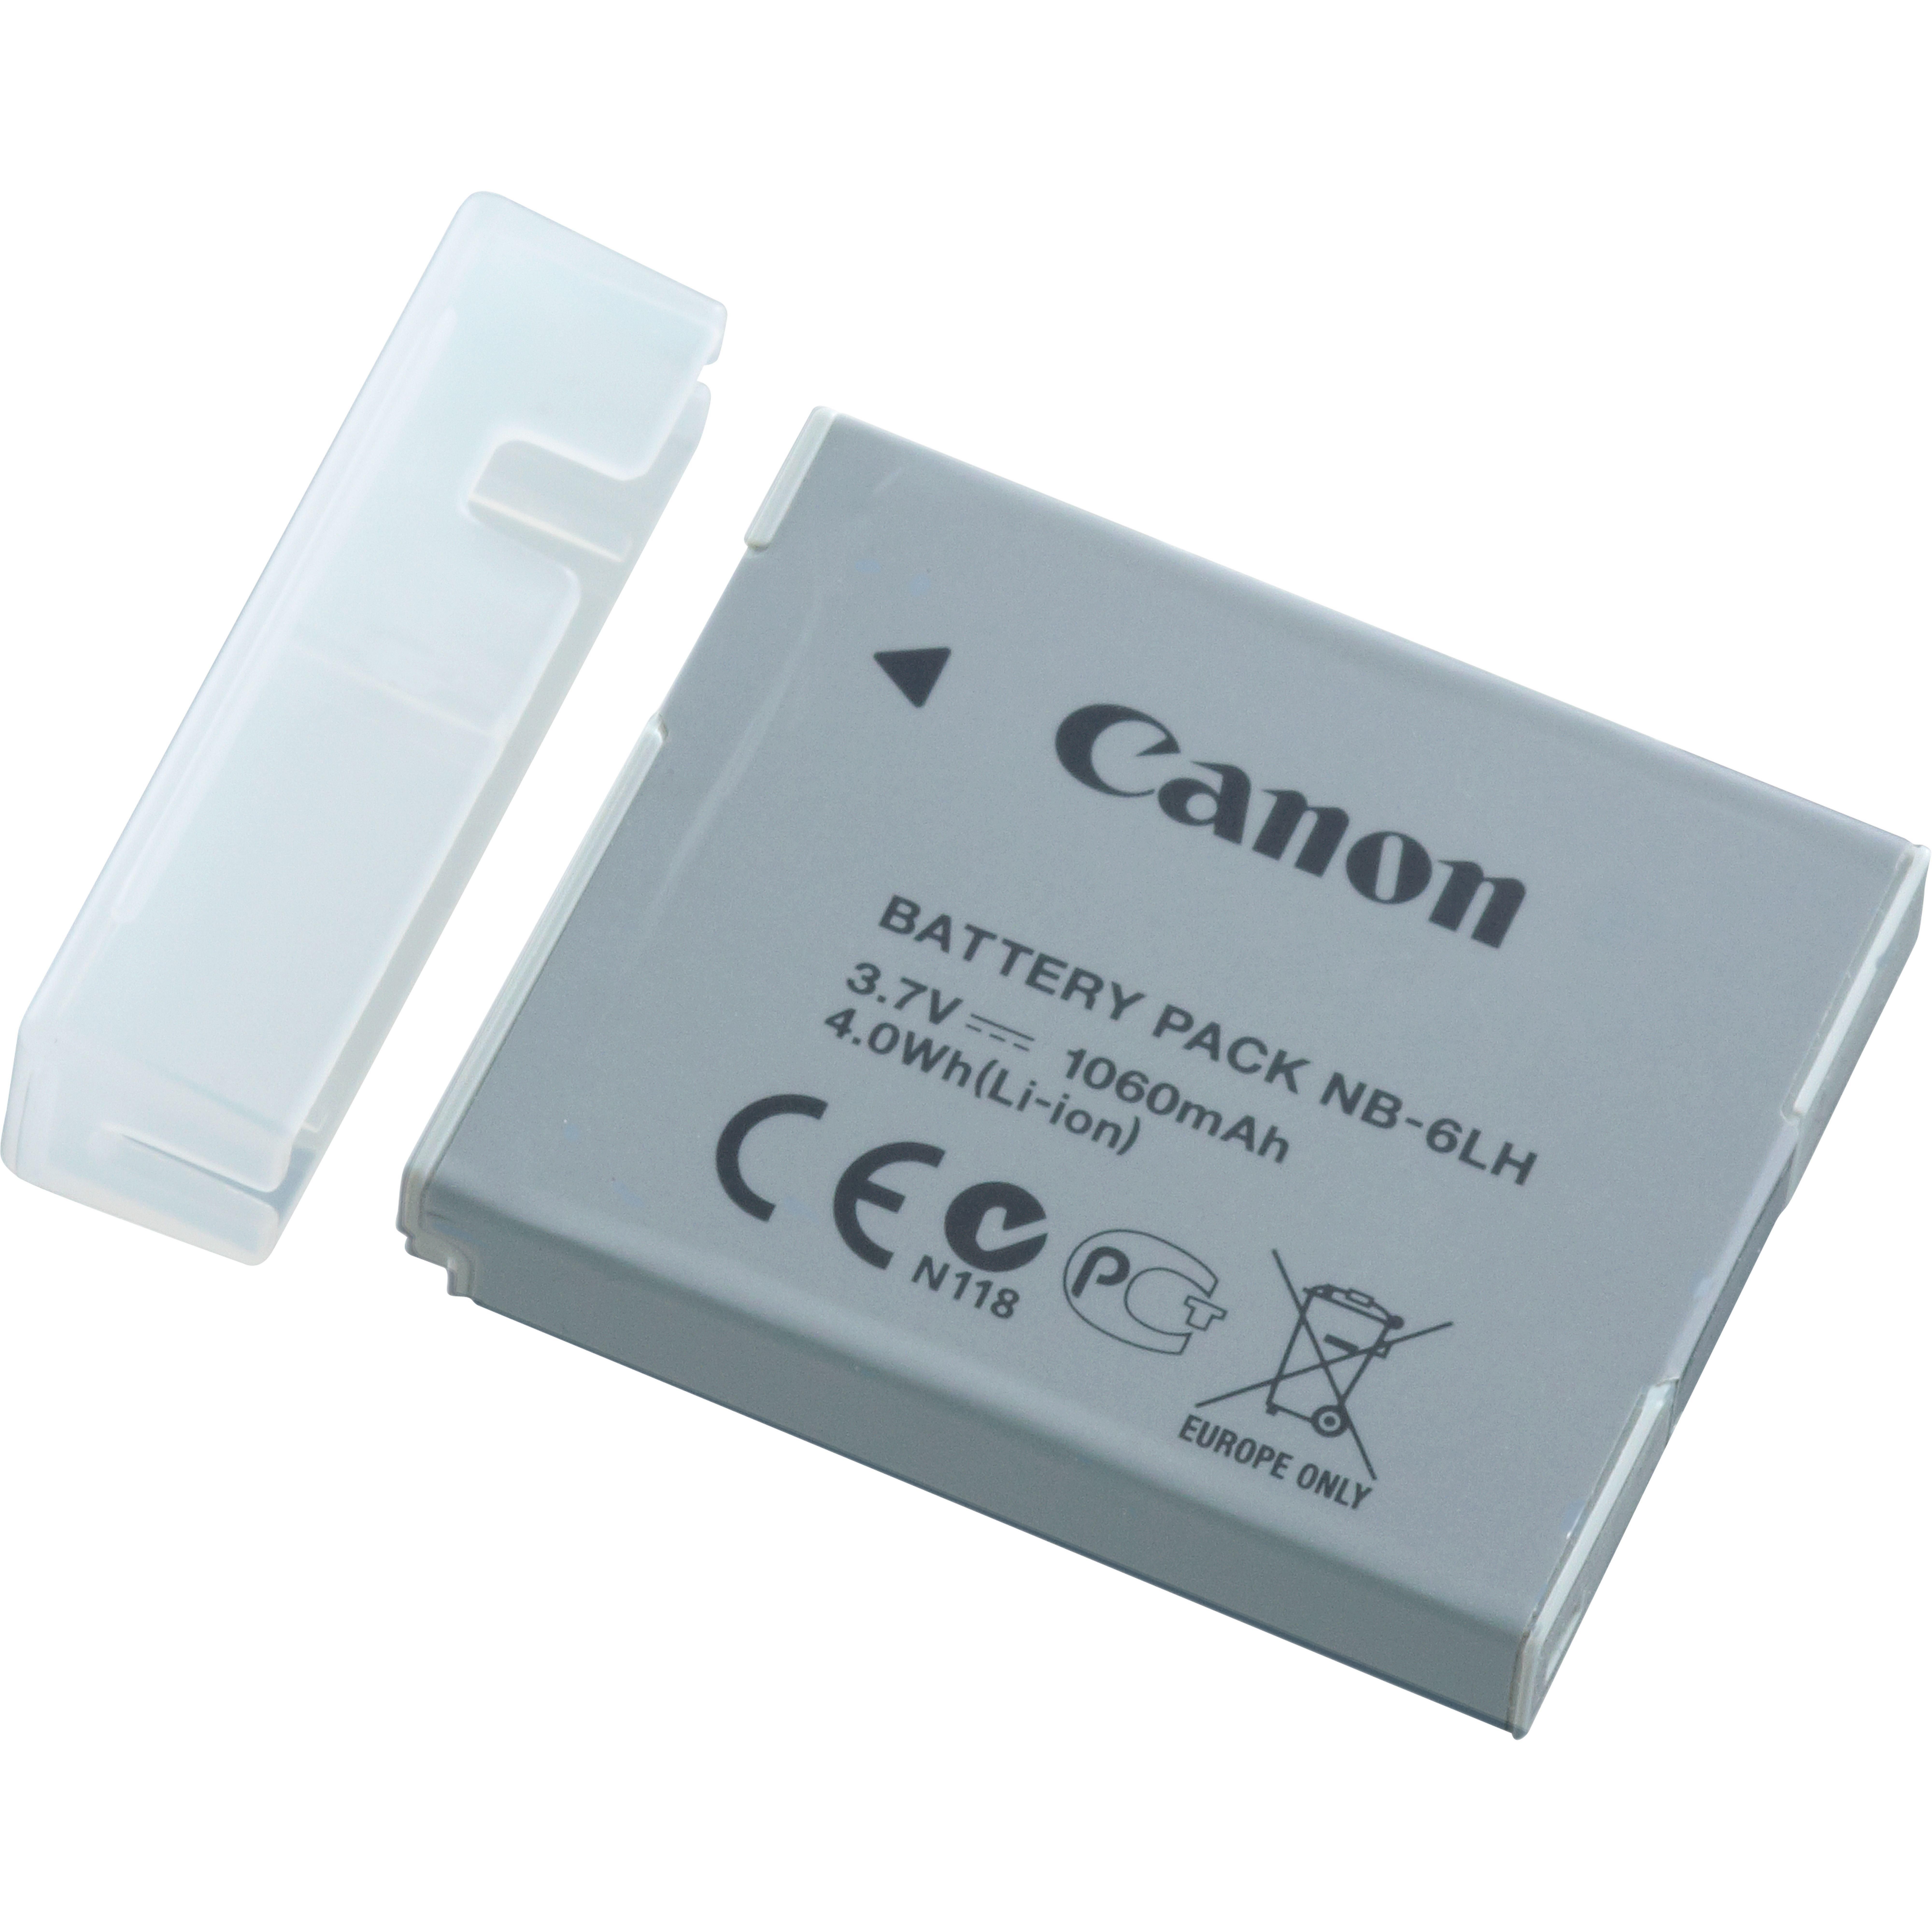 Canon Batteria Ricaricabile Nb-6lh